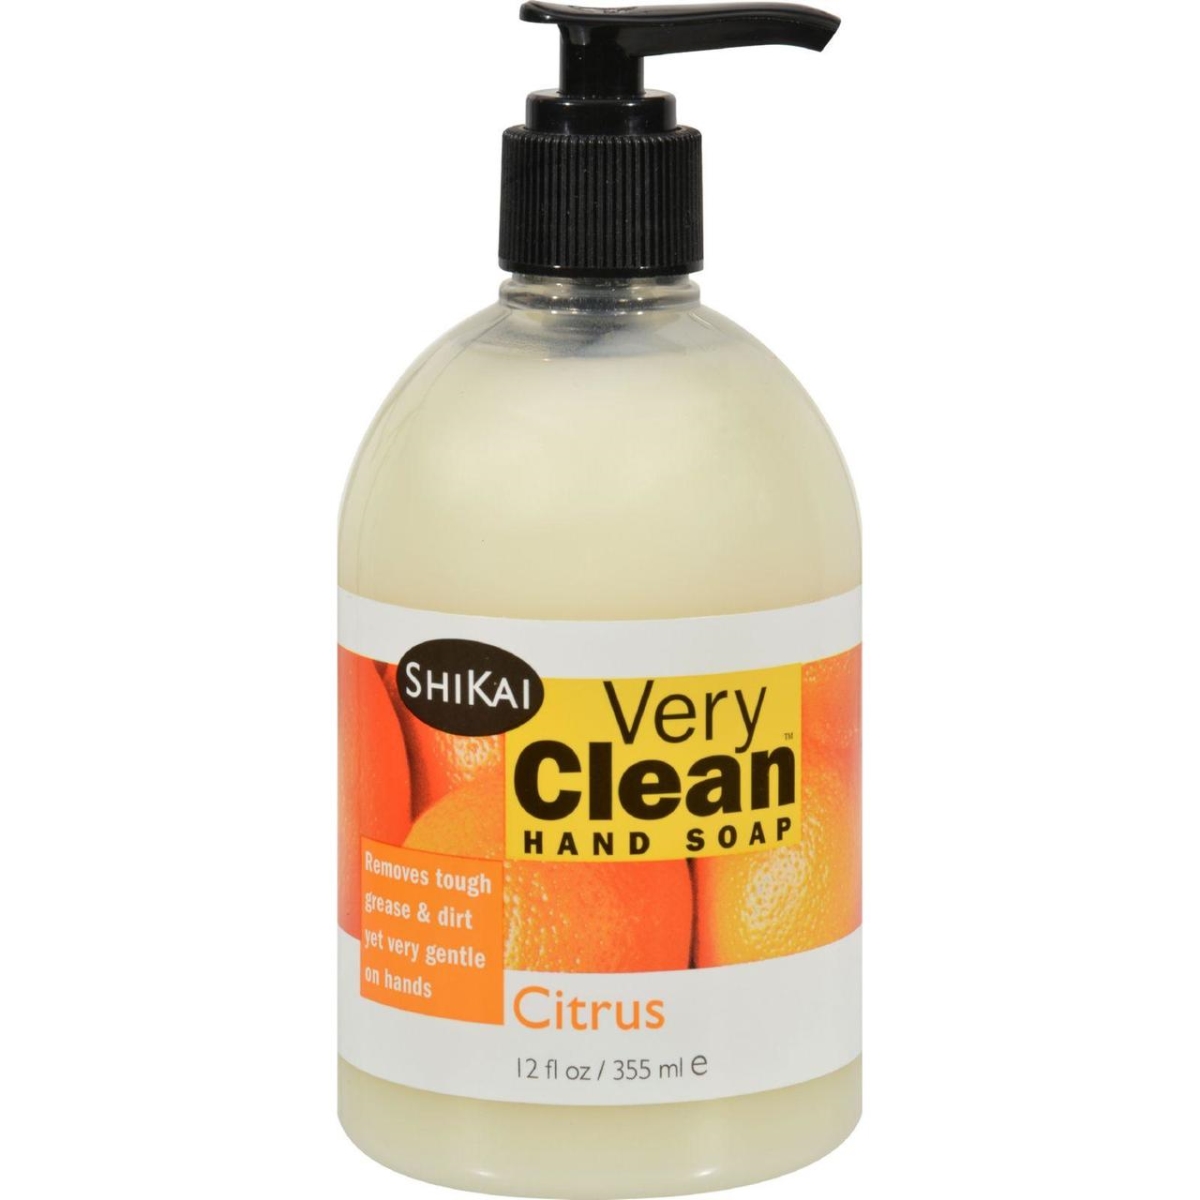 Hg1384098 12 Oz Hand Soap - Very Clean Citrus